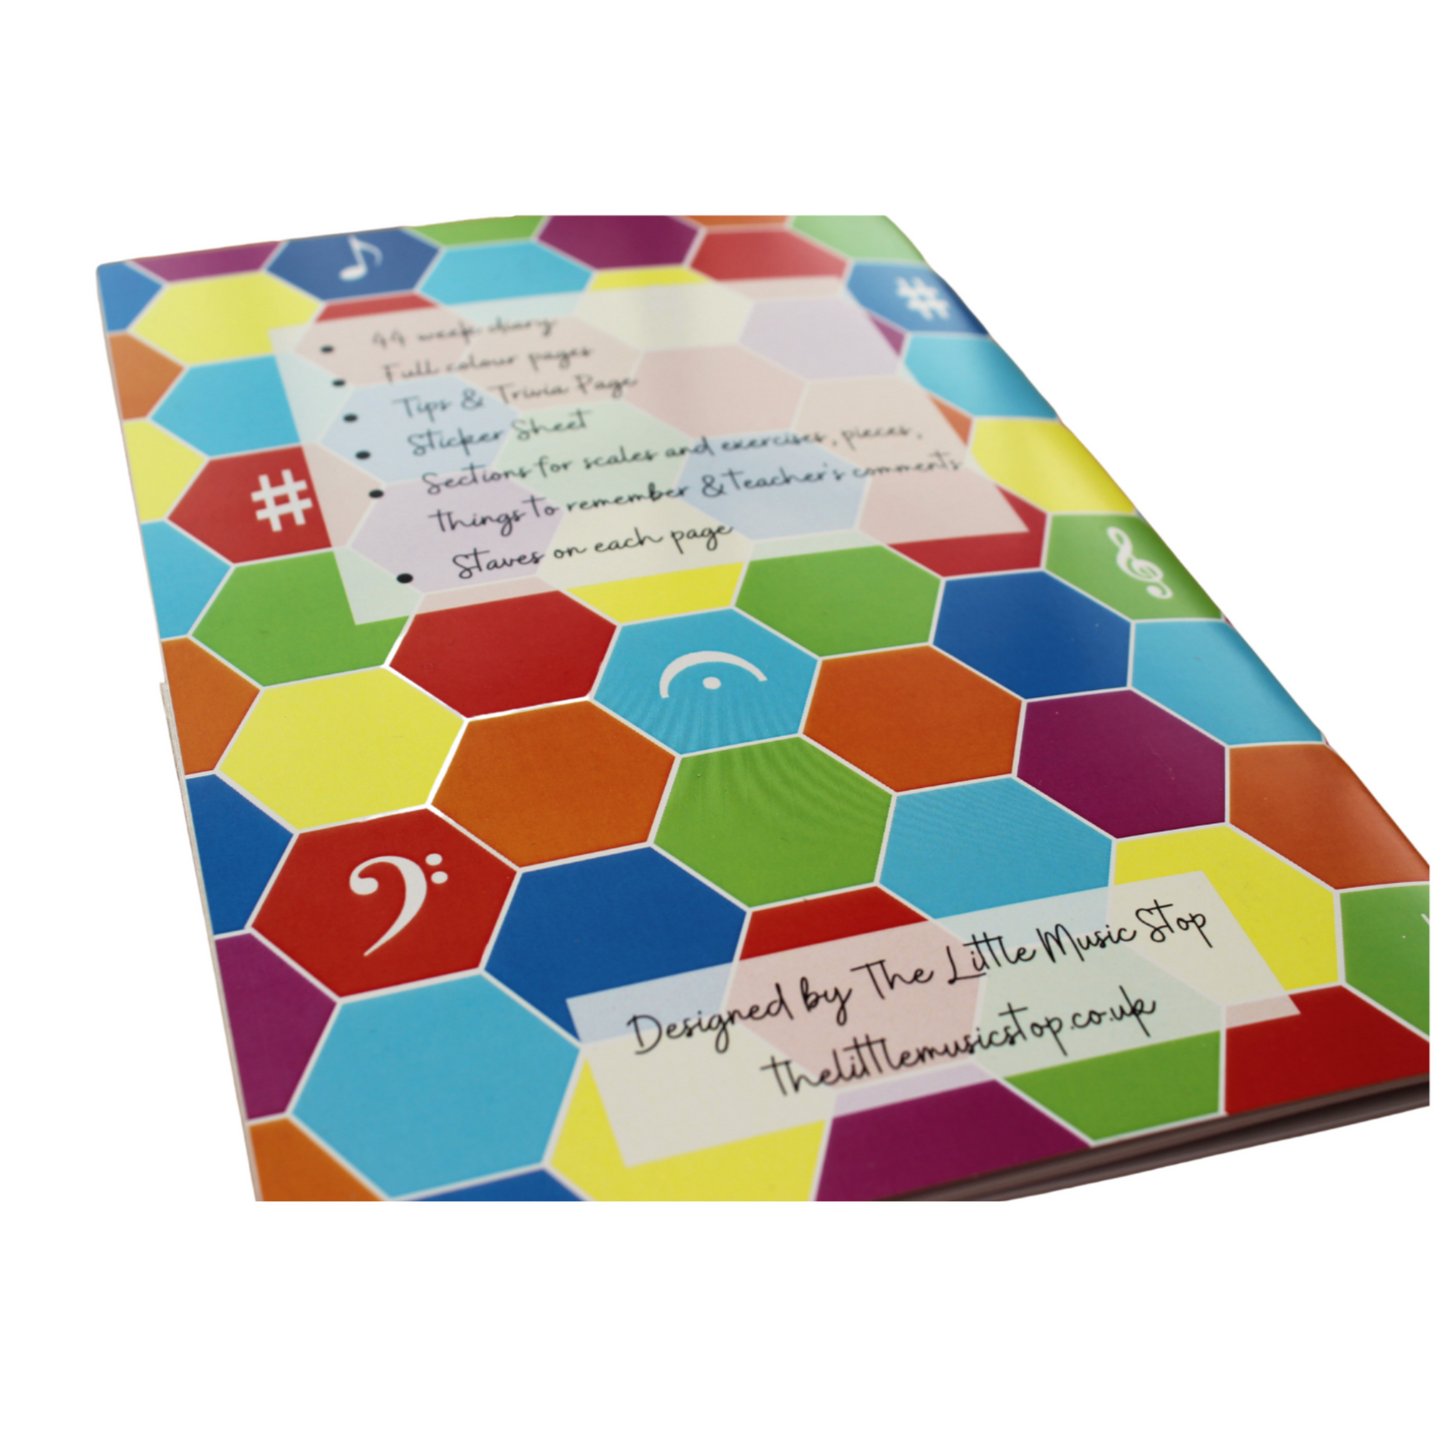 back of practice diary, same hexagonal design